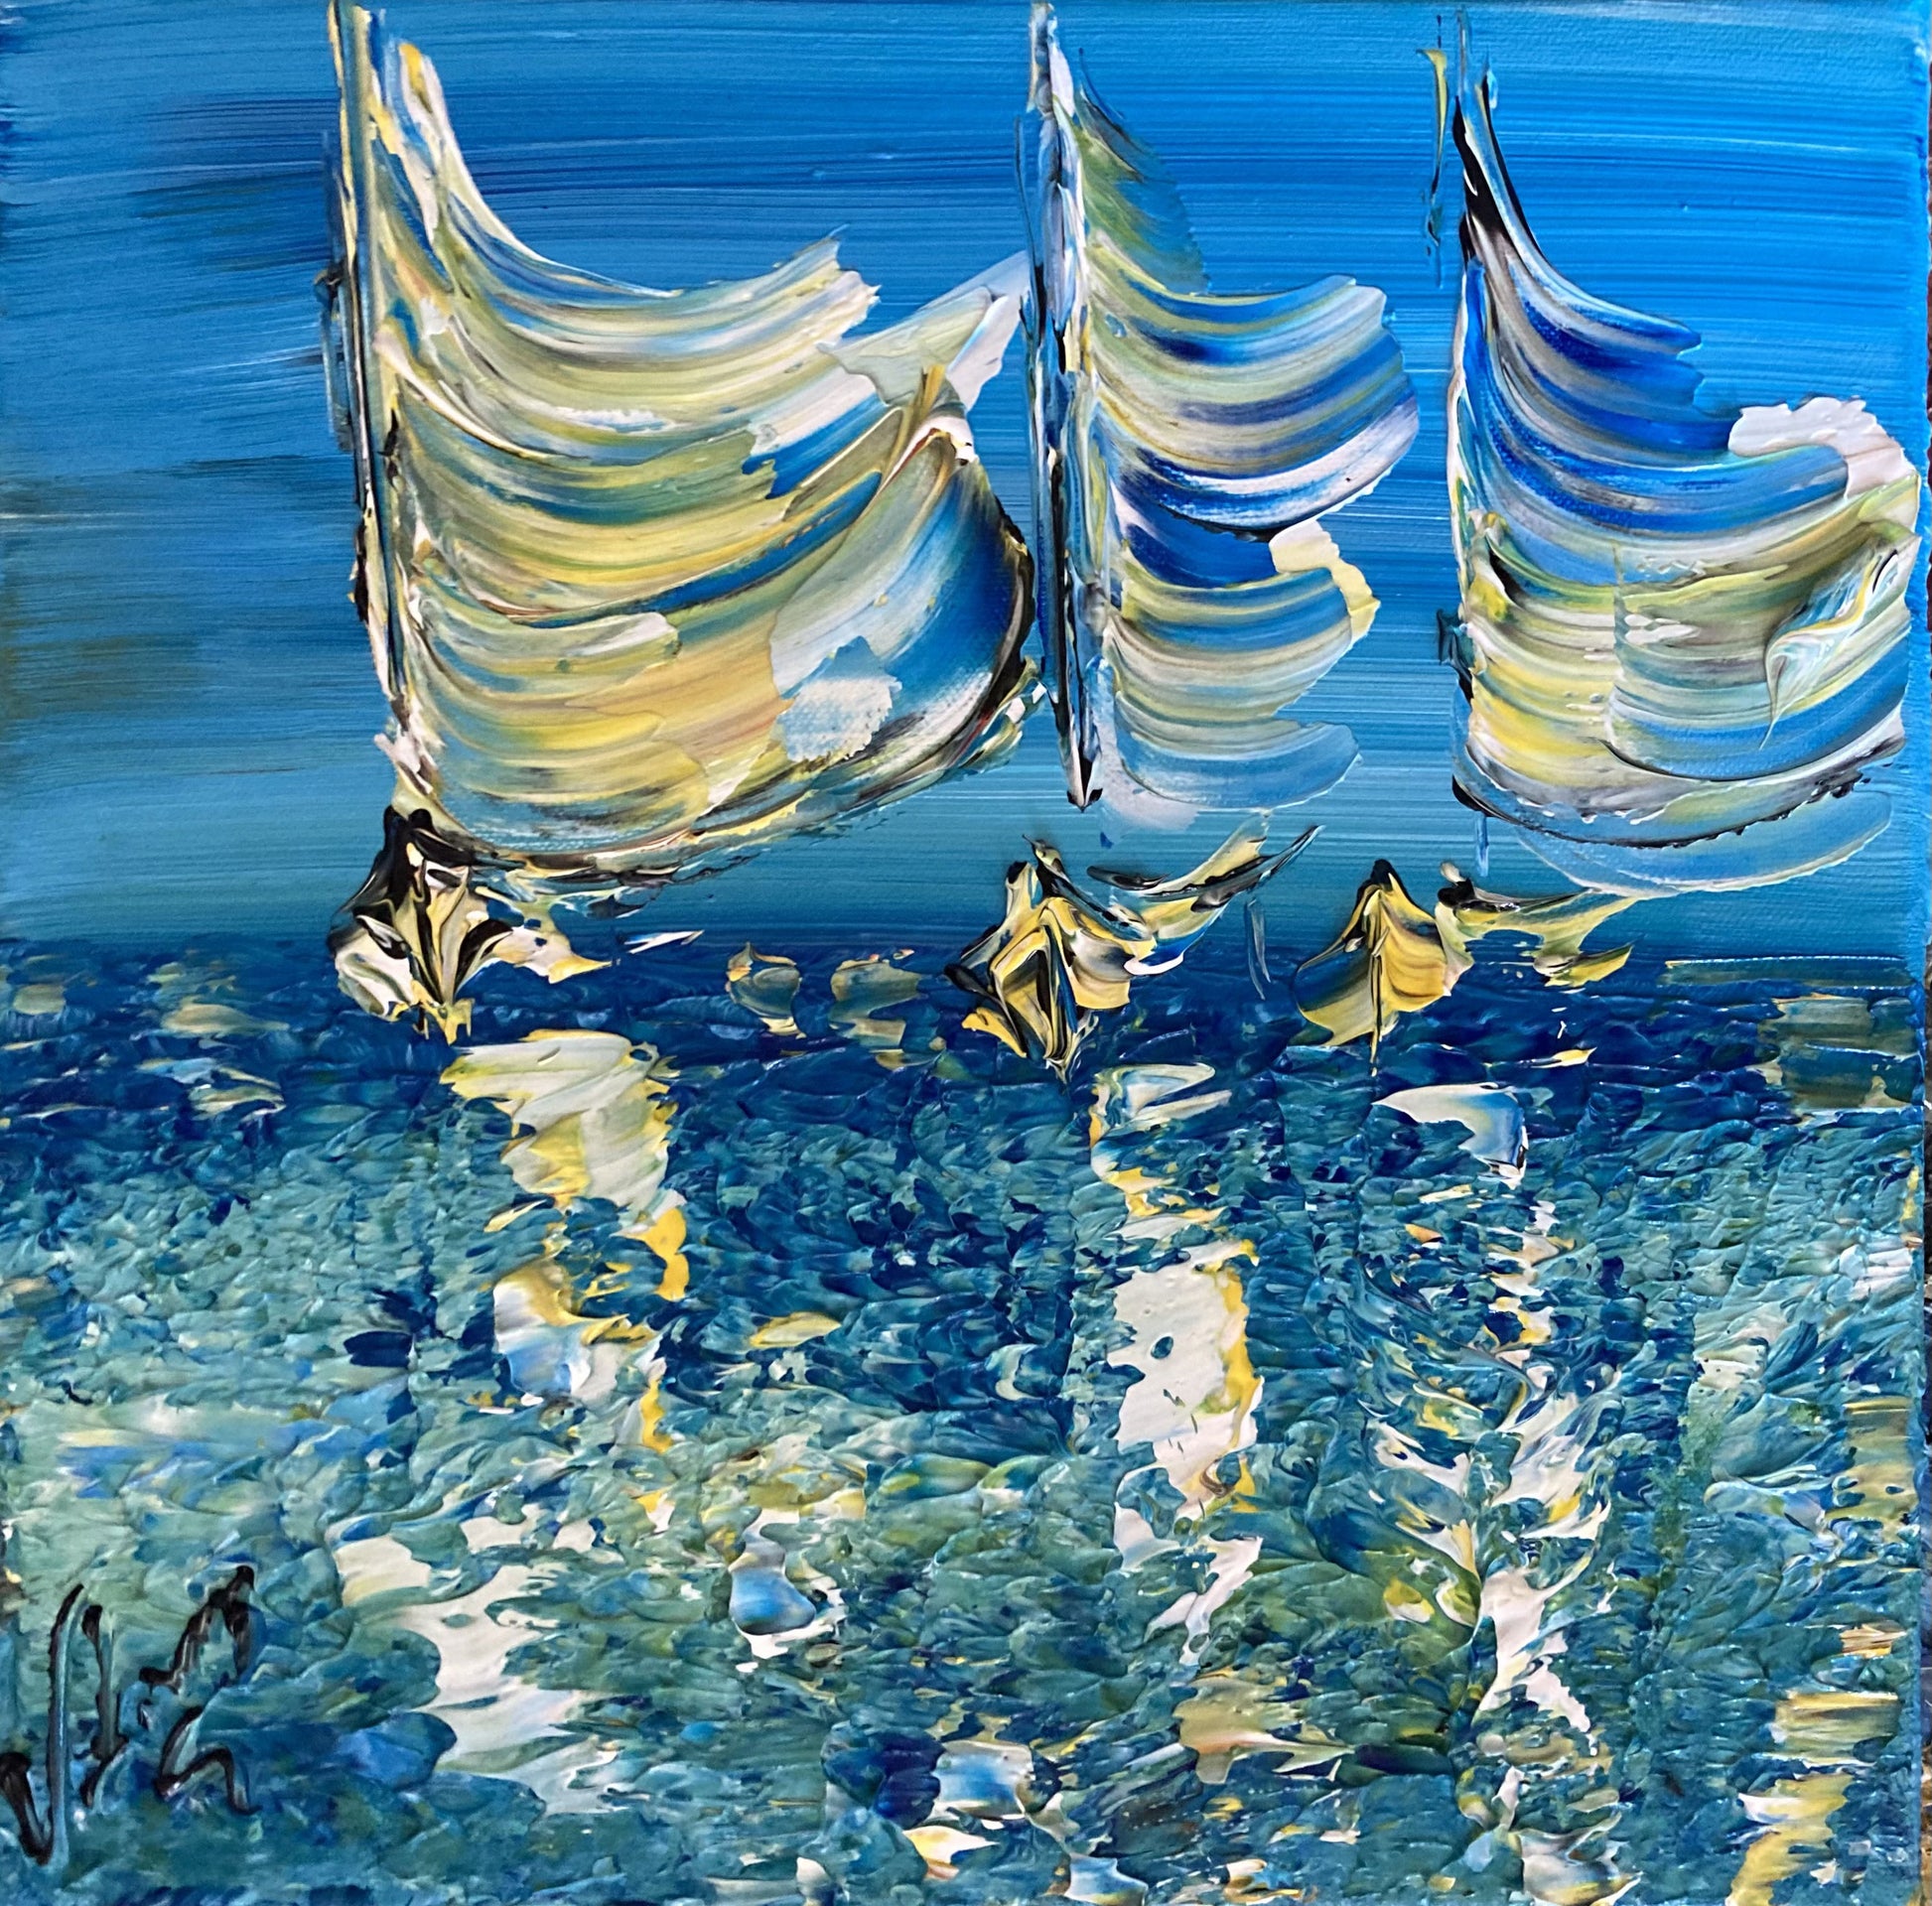 Tableau Marine Voiliers peinture sur toile 30x30 virginie Linard ©